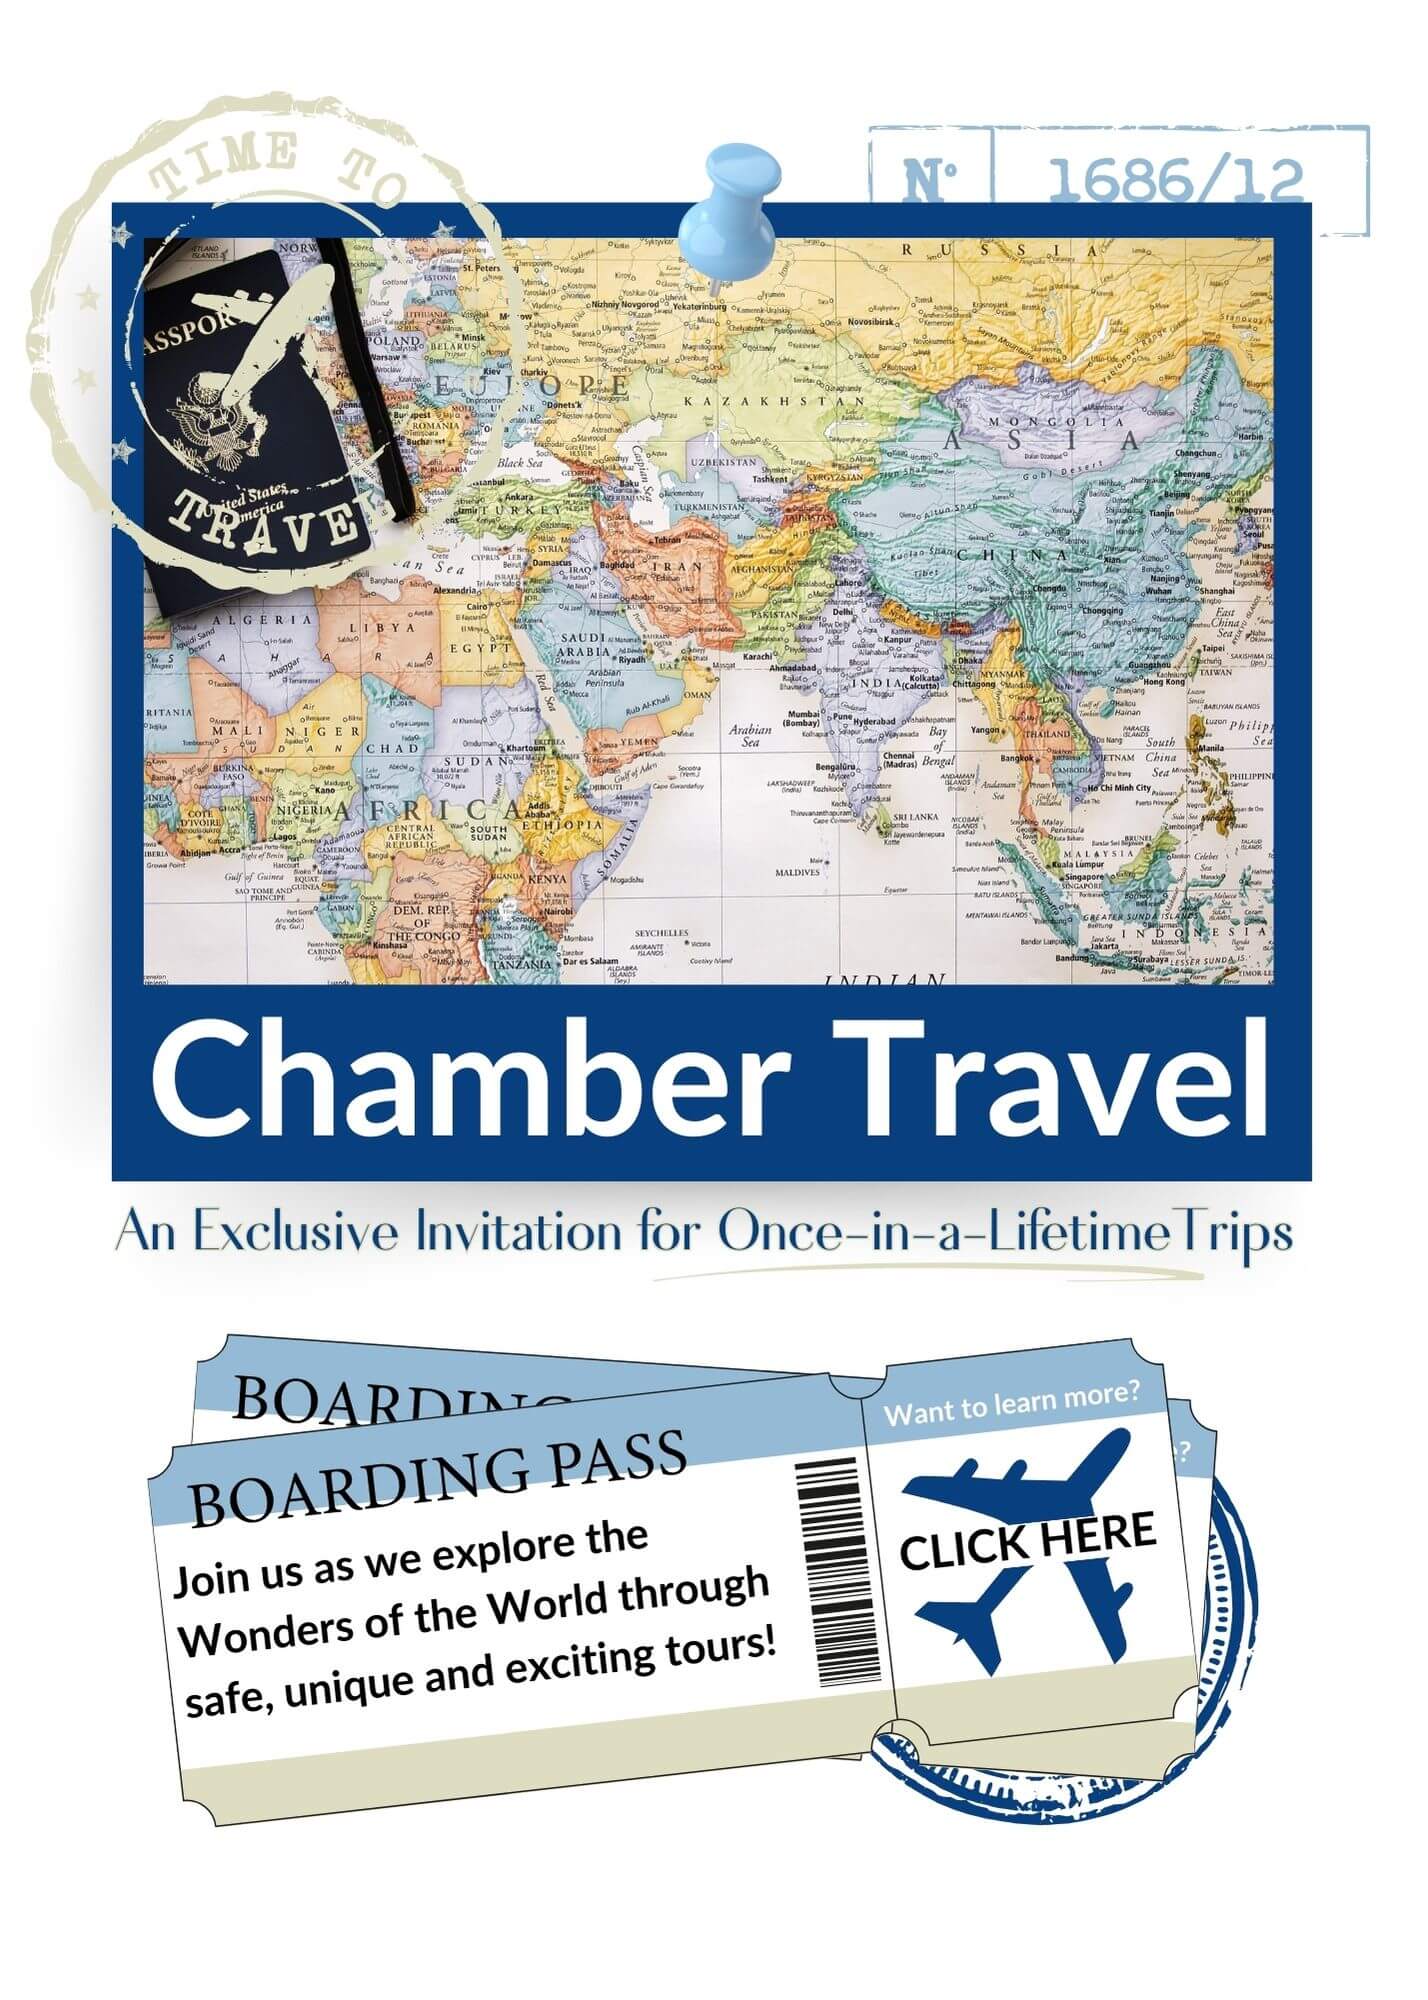 Chamber travel genreic image-smnaller